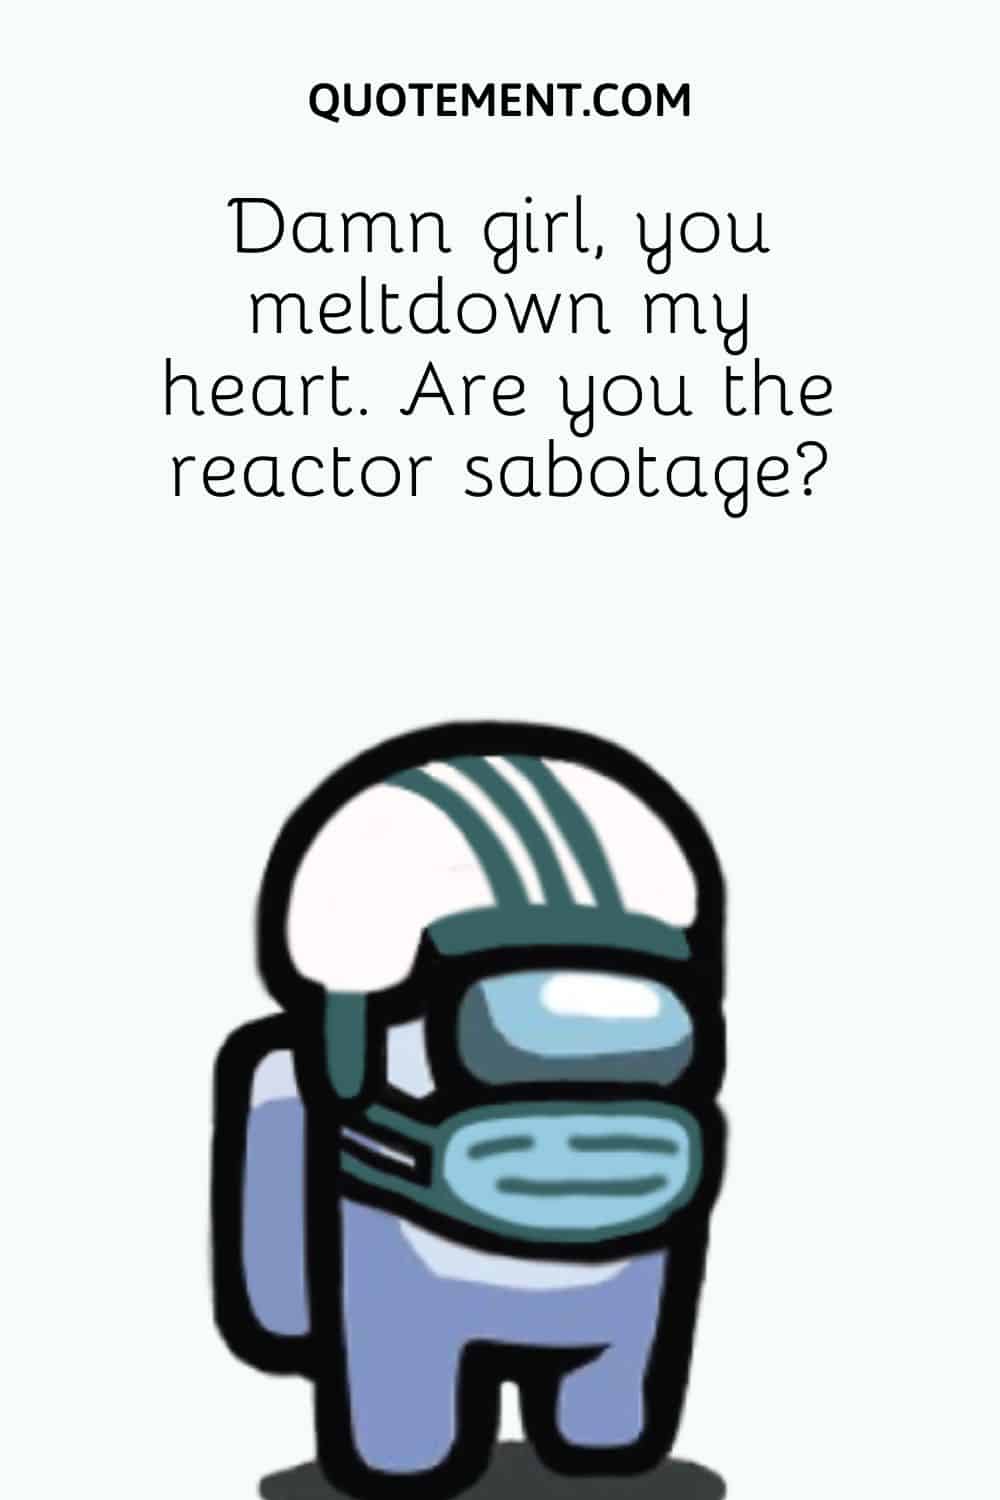 Damn girl, you meltdown my heart. Are you the reactor sabotage